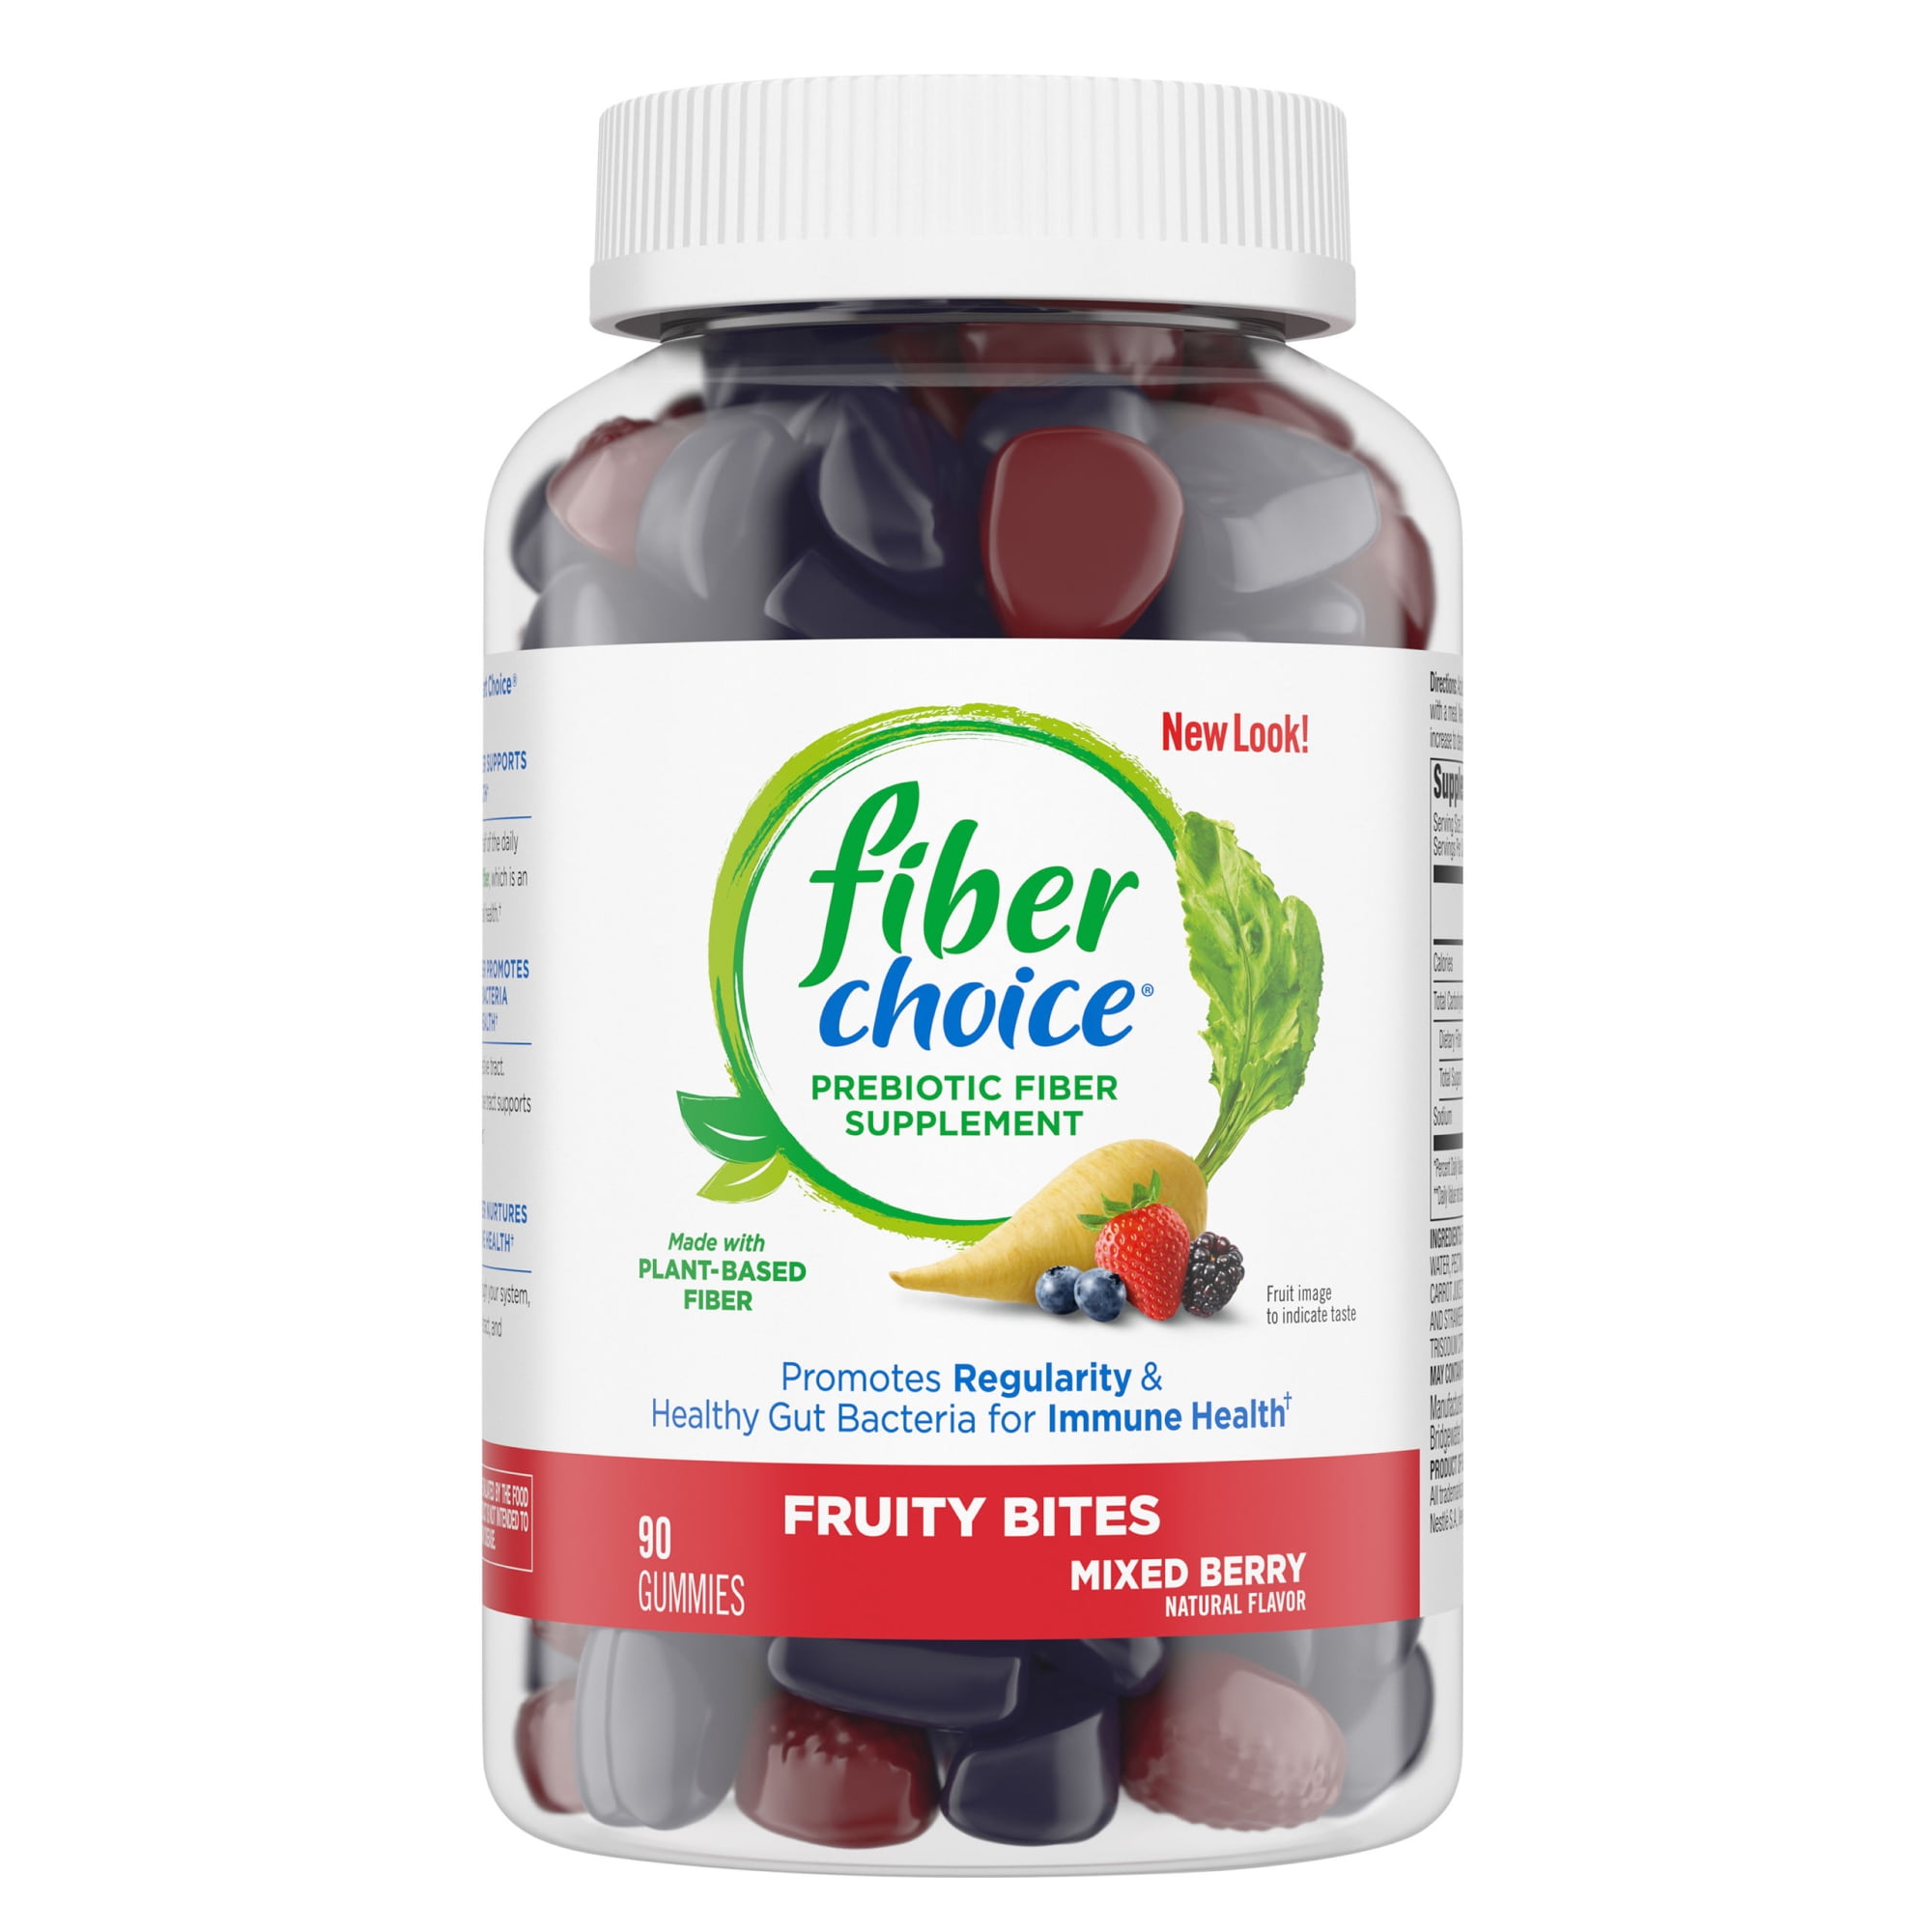 Lot of 2 Fiber Choice Daily Probiotic Fiber Supplement - 90